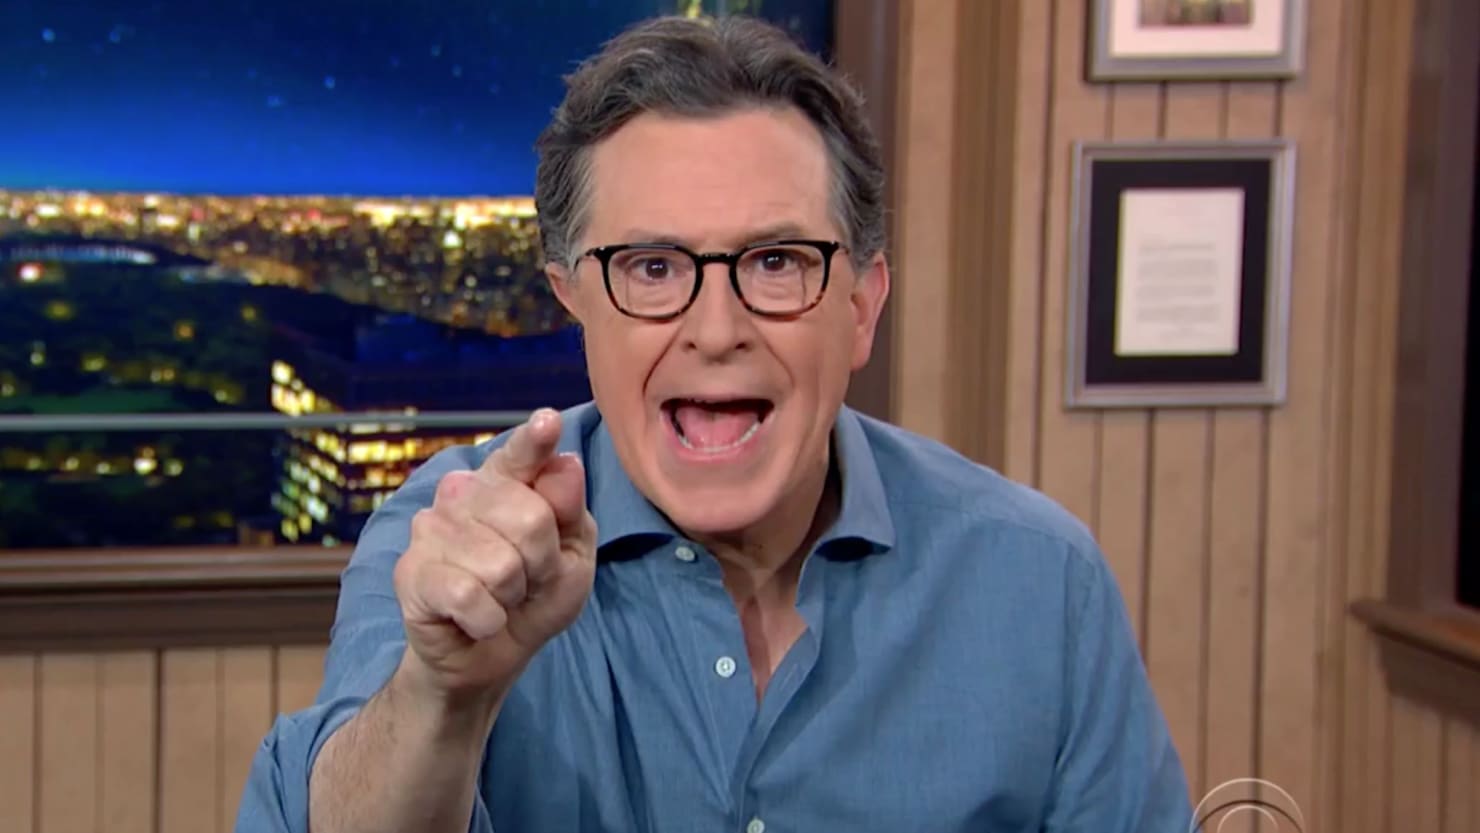 Stephen Colbert rages at Republicans demanding ‘unity’ after Capitol Riot